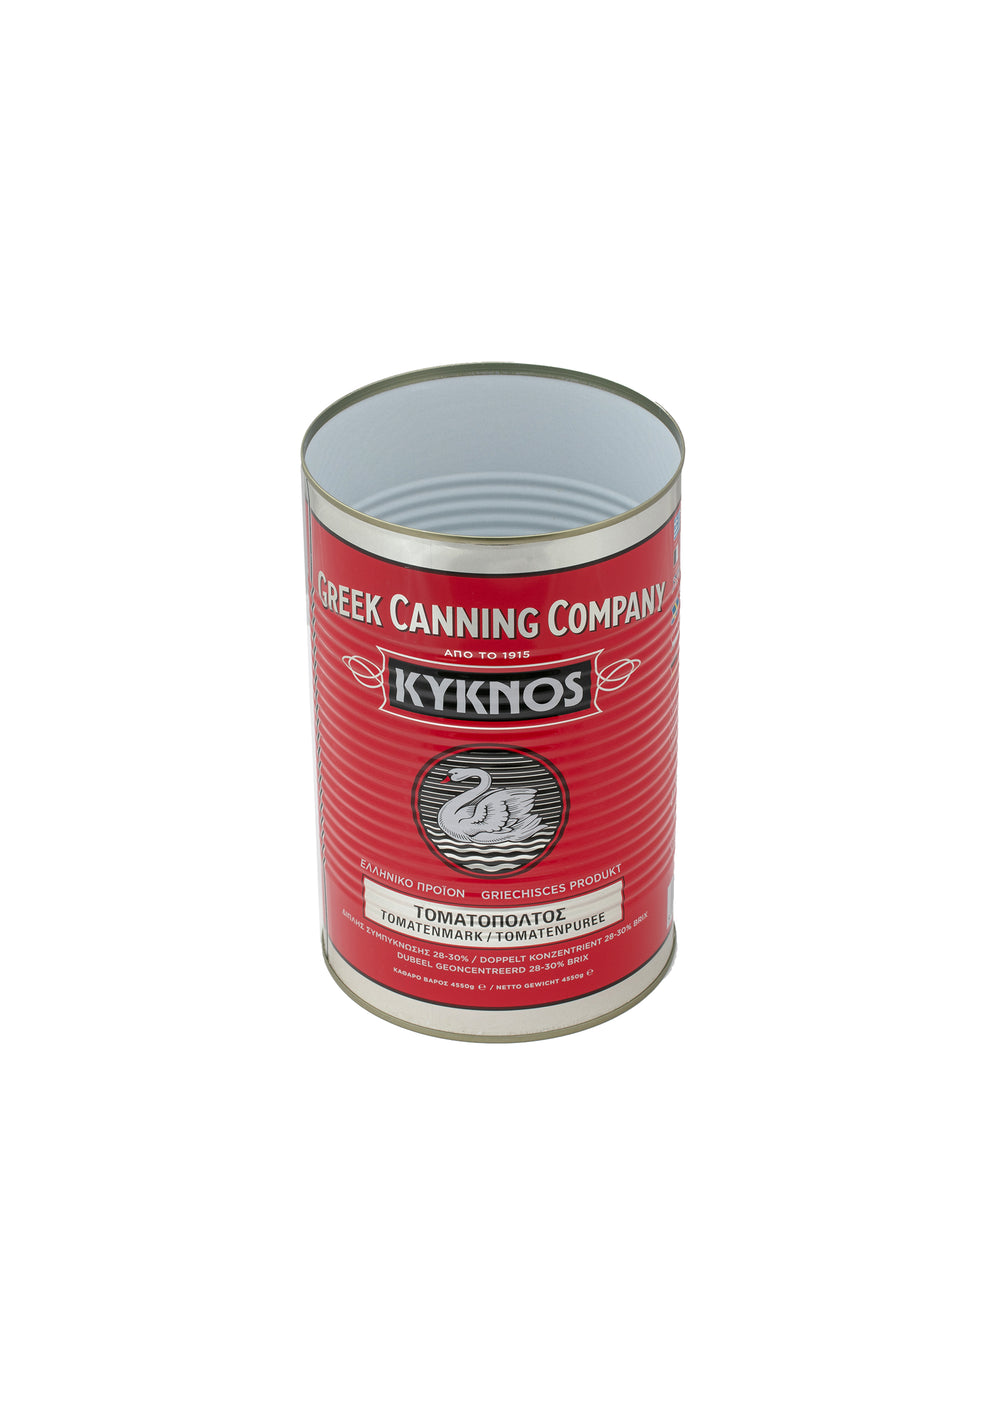 KYKNOS can 410 gr. (5 items)